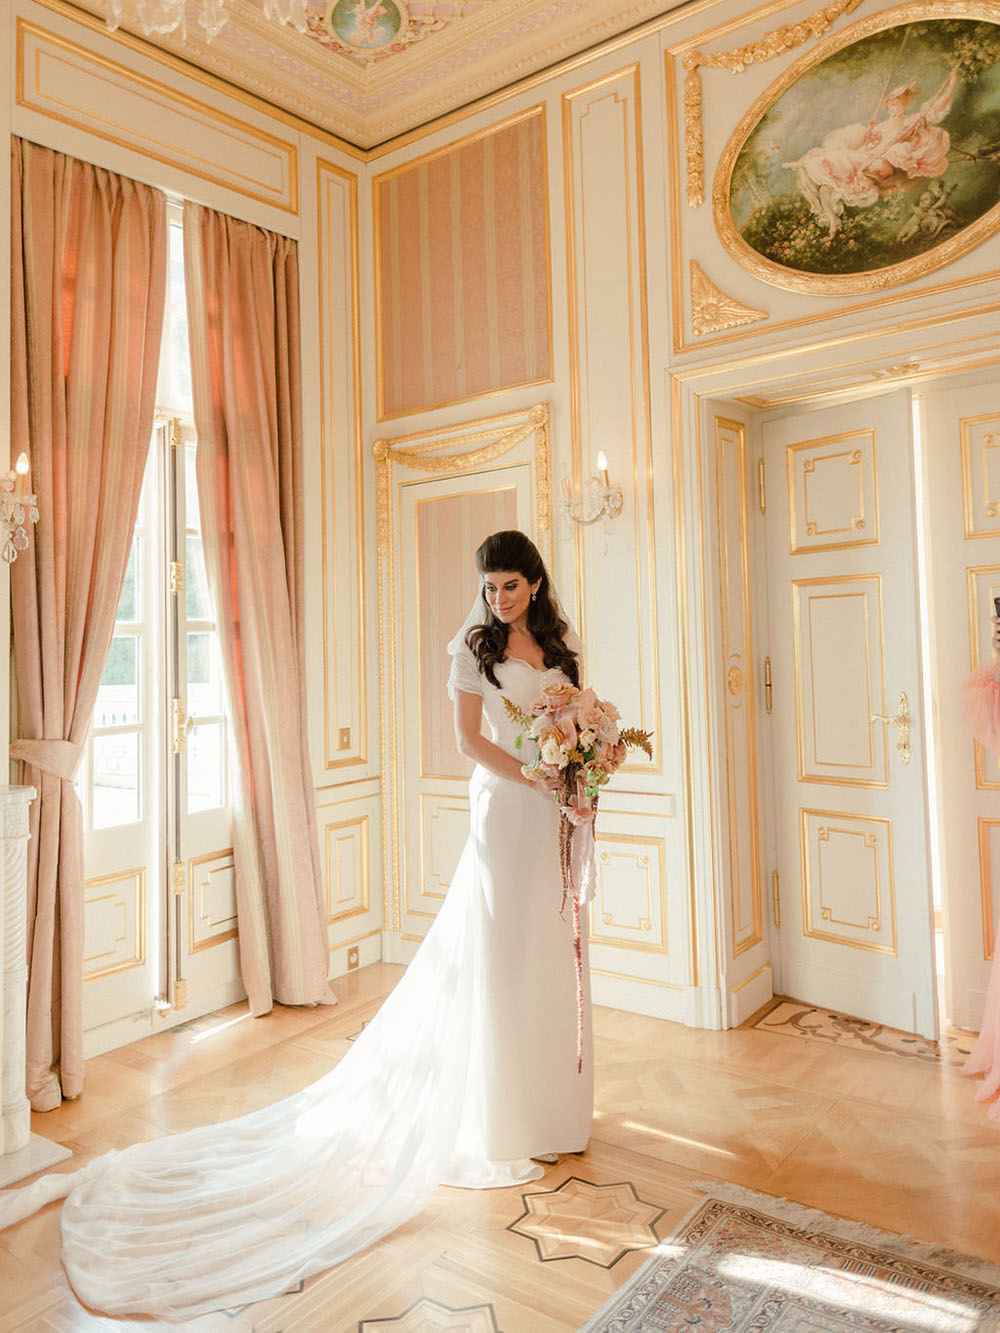 A Coral & Blush Wedding at Chateau Saint Georges ⋆ Ruffled